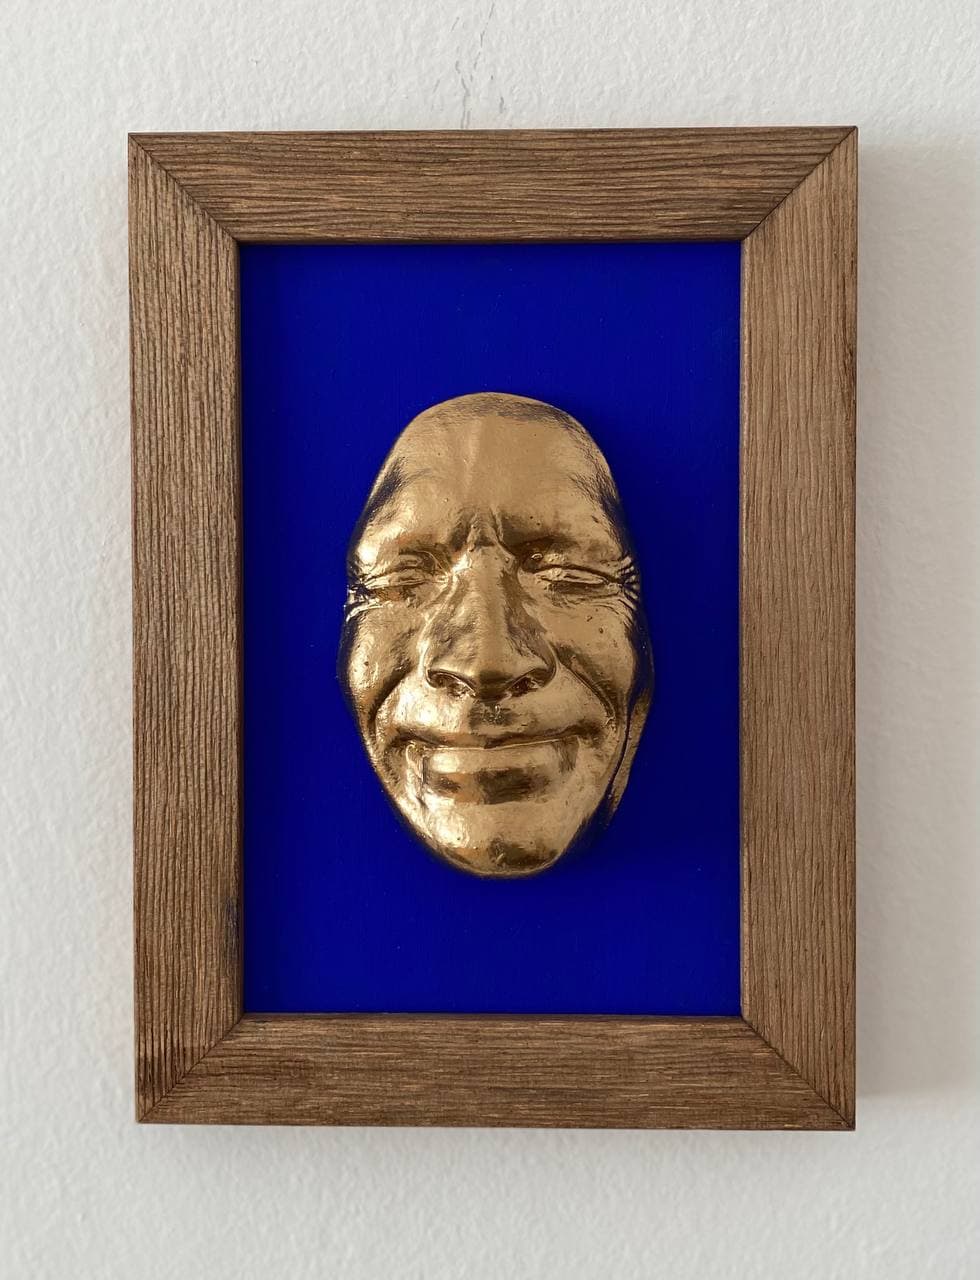 Gregos, Smile, 10x15cm, Resin, Acrylic and Aerosol. Wooden frame, 2020